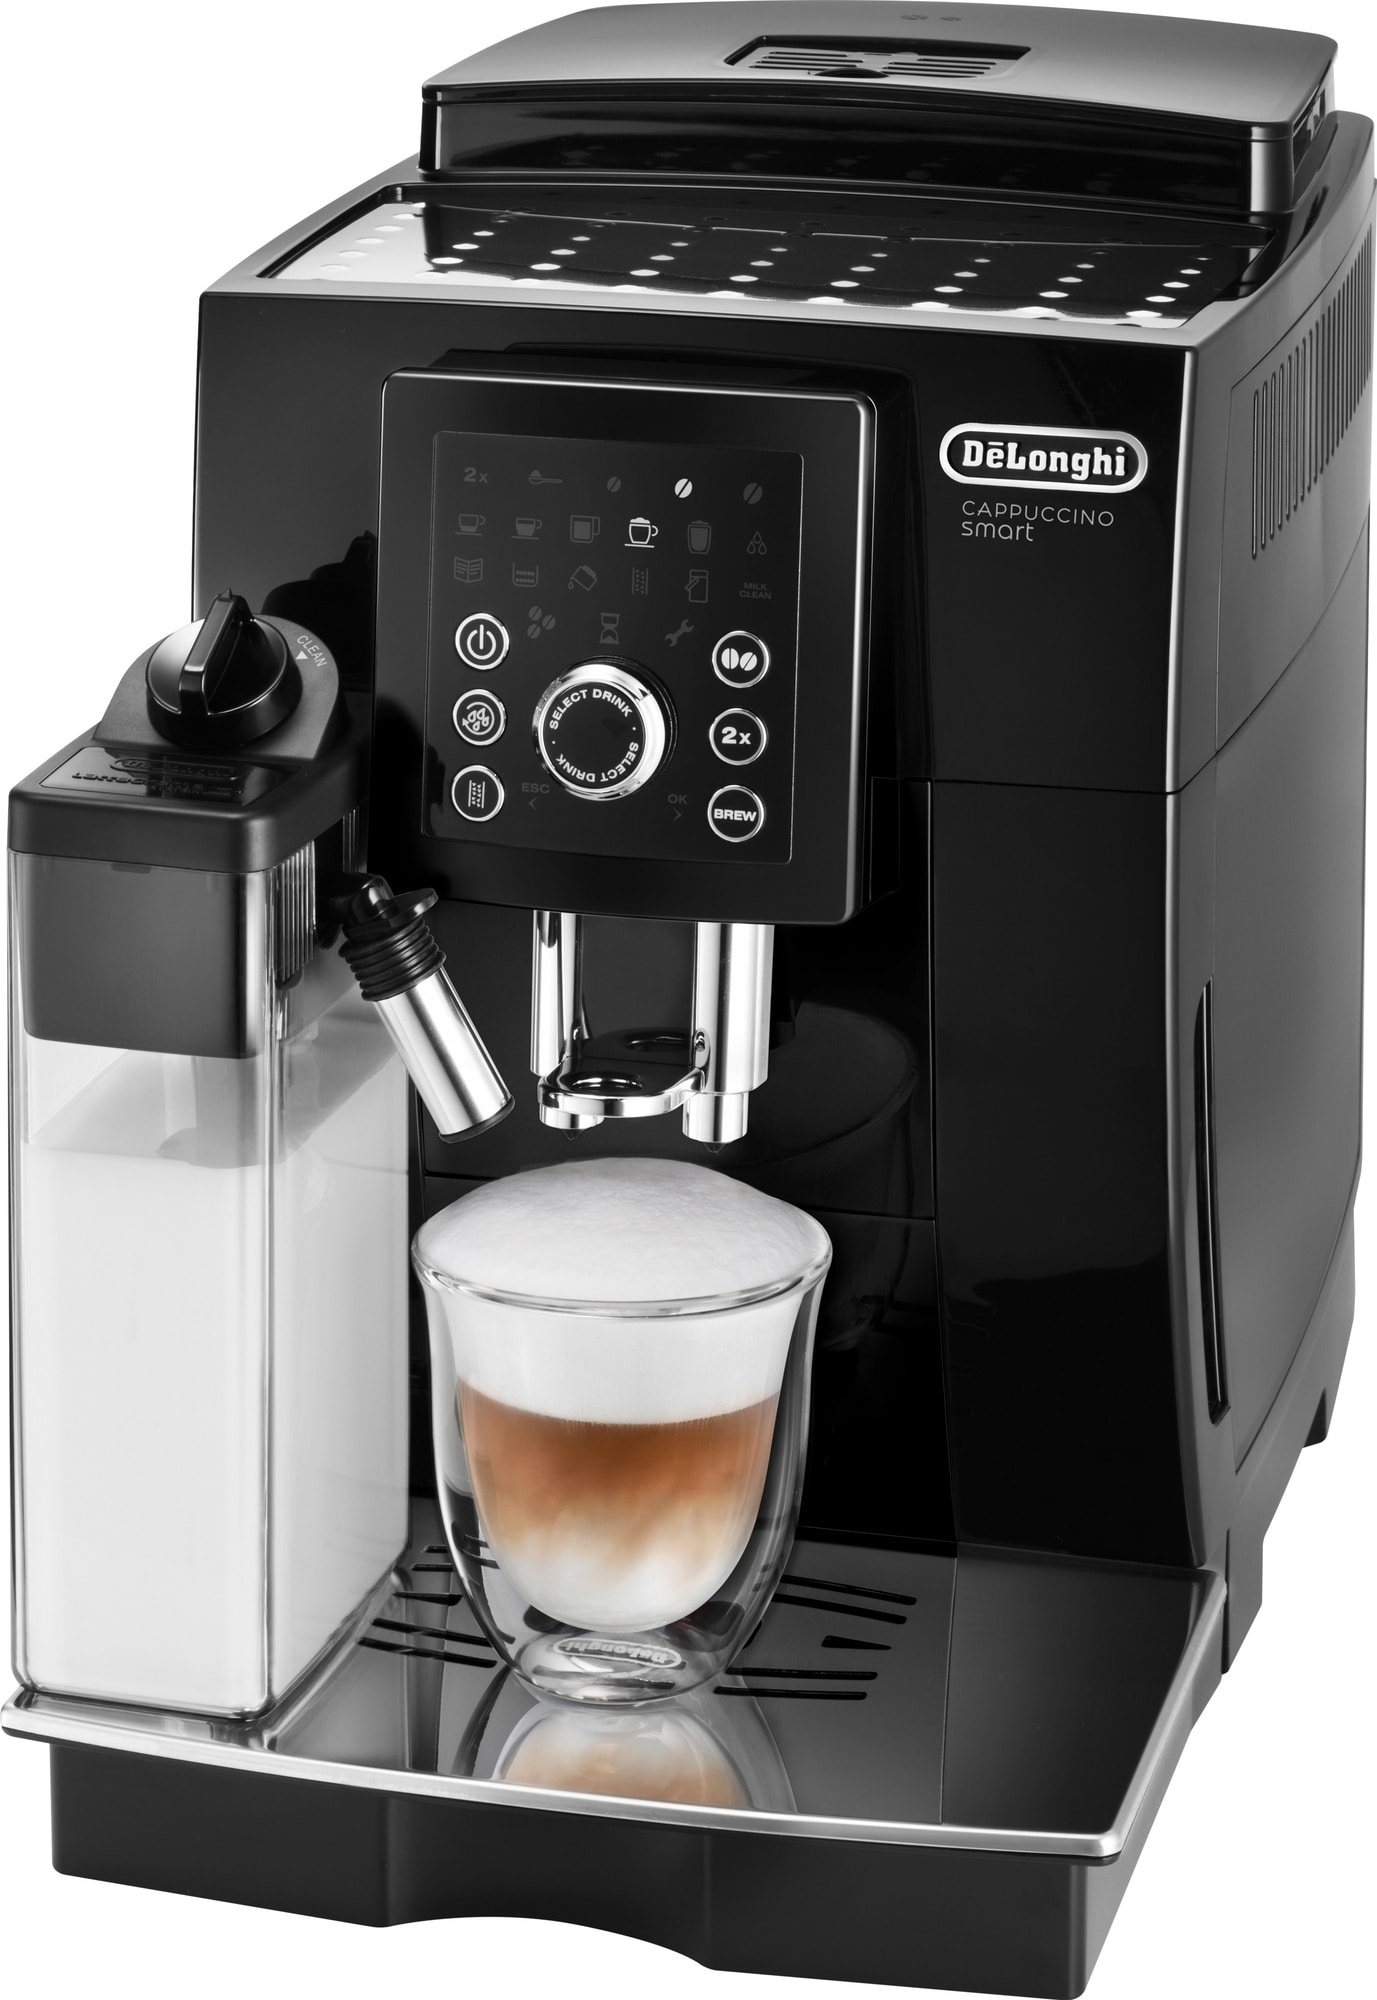 DeLonghi Cappuccino Smart ECAM23.260.B kahvikone - Gigantti verkkokauppa